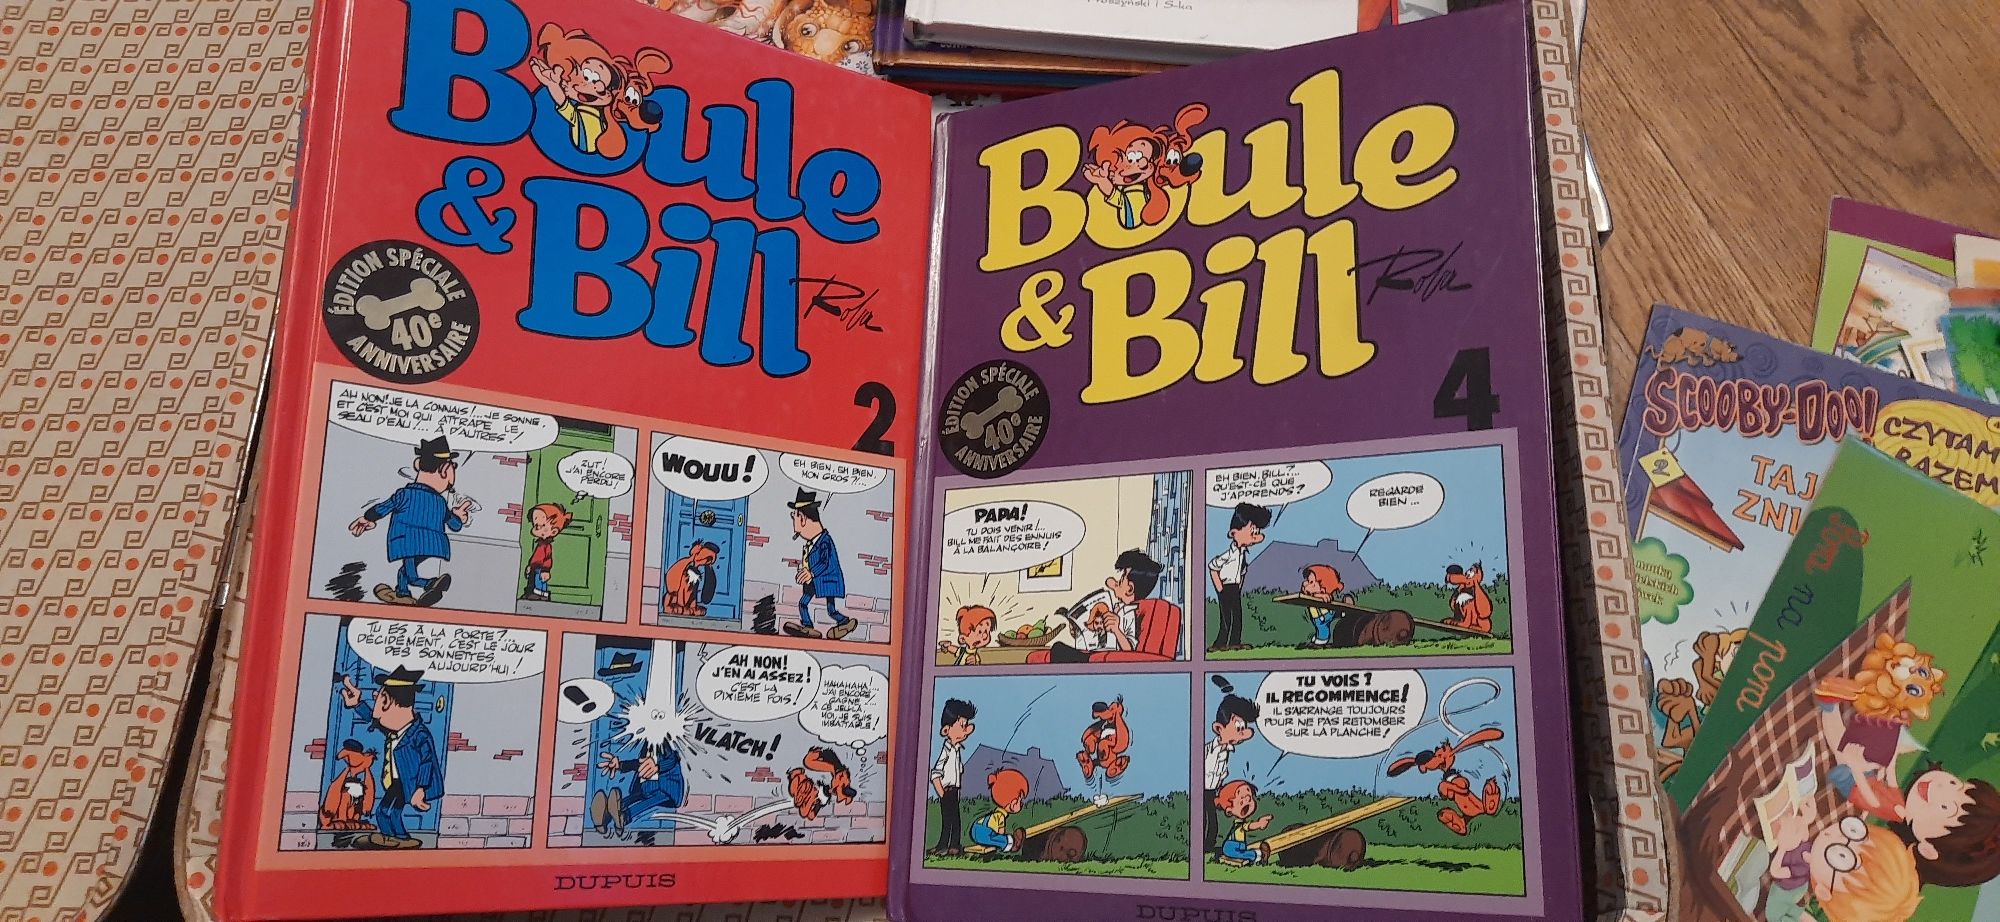 Komiks Boule & Bill numer 4 i 2 wyd. po francusku